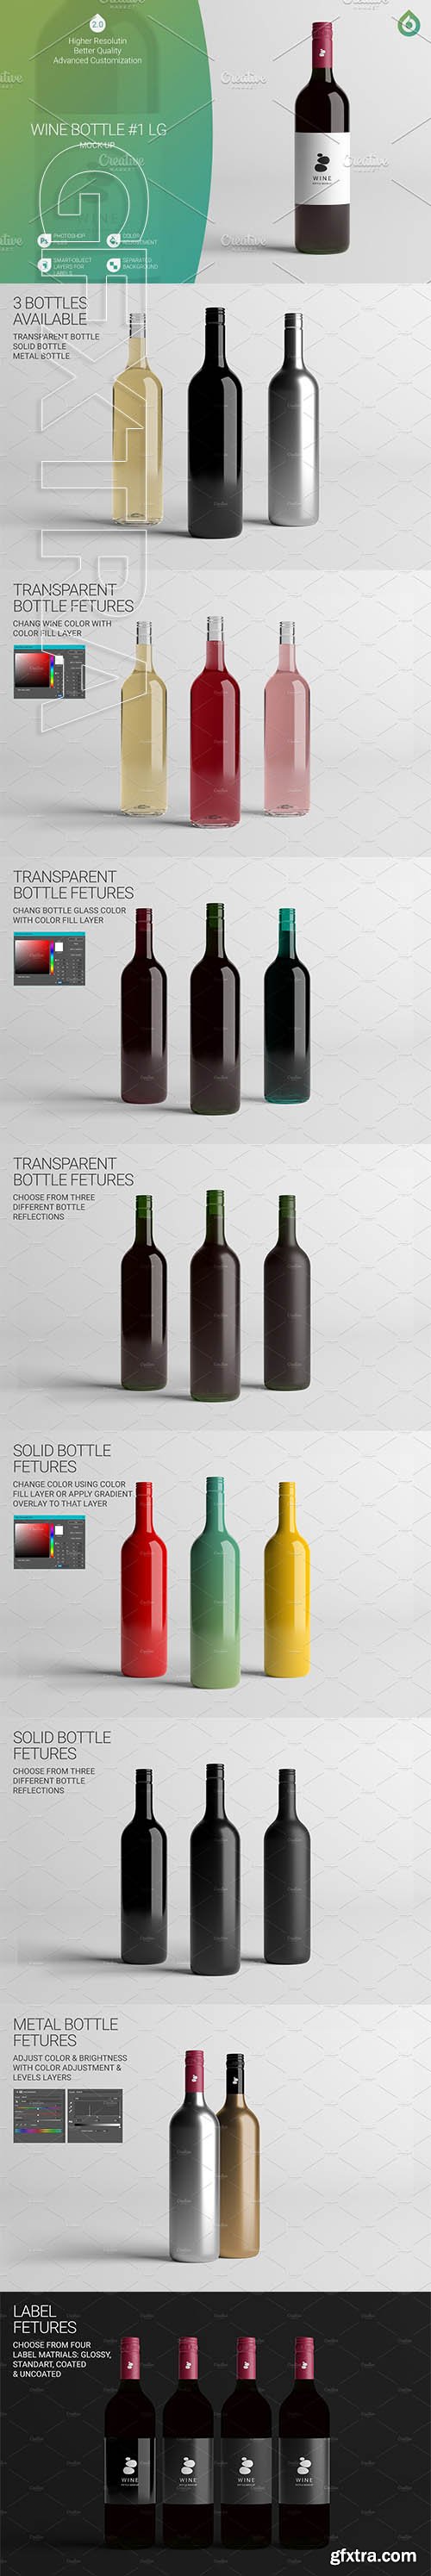 CreativeMarket - Wine Bottle LG Mock-Up 1 V2 2816412